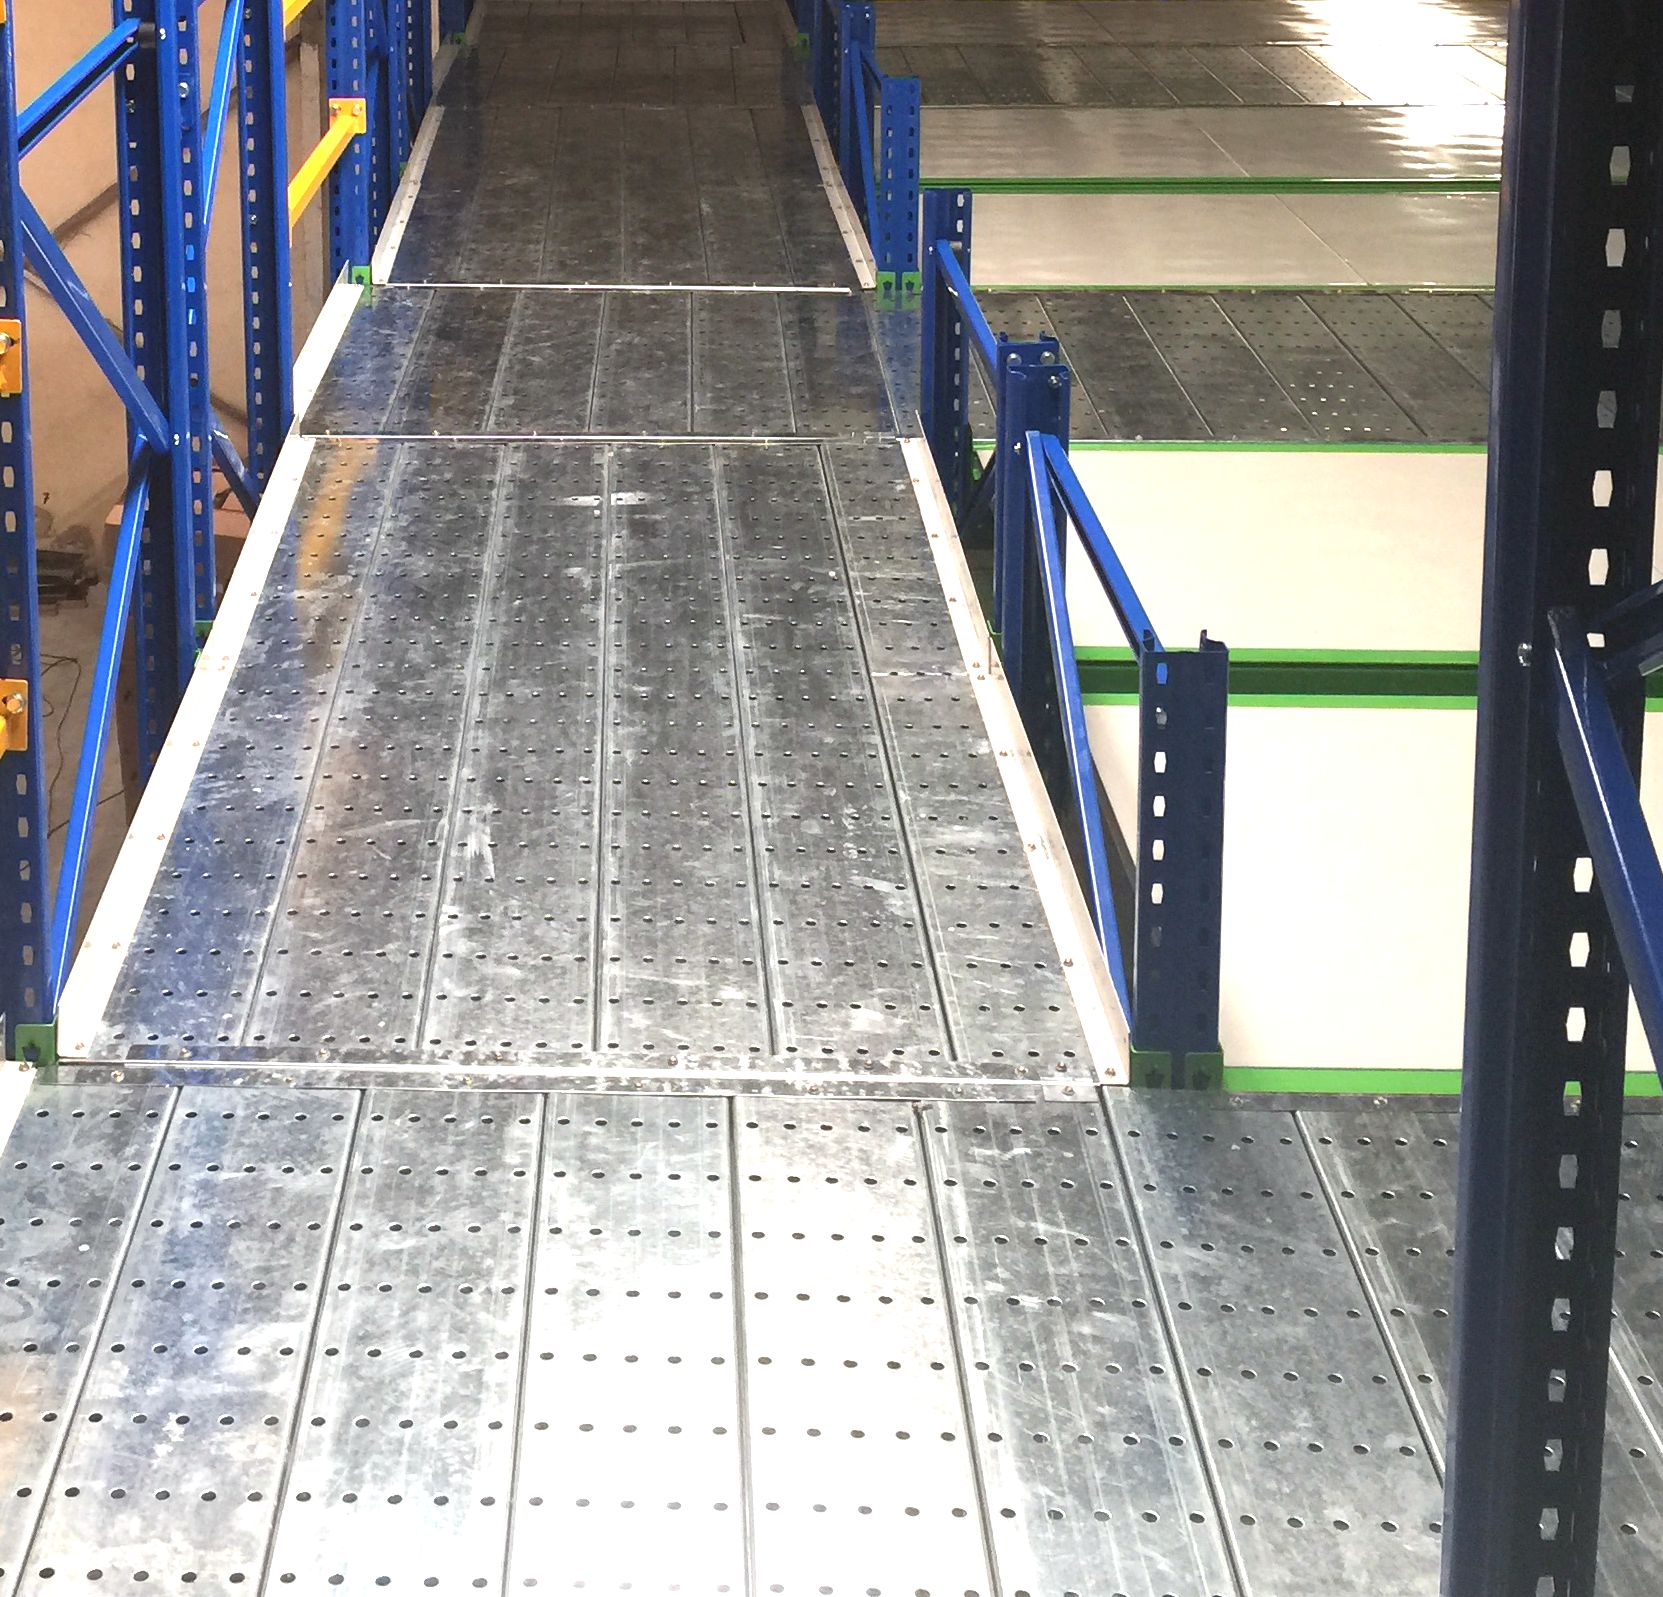 Warehouse mezzanine floors with pallet racking